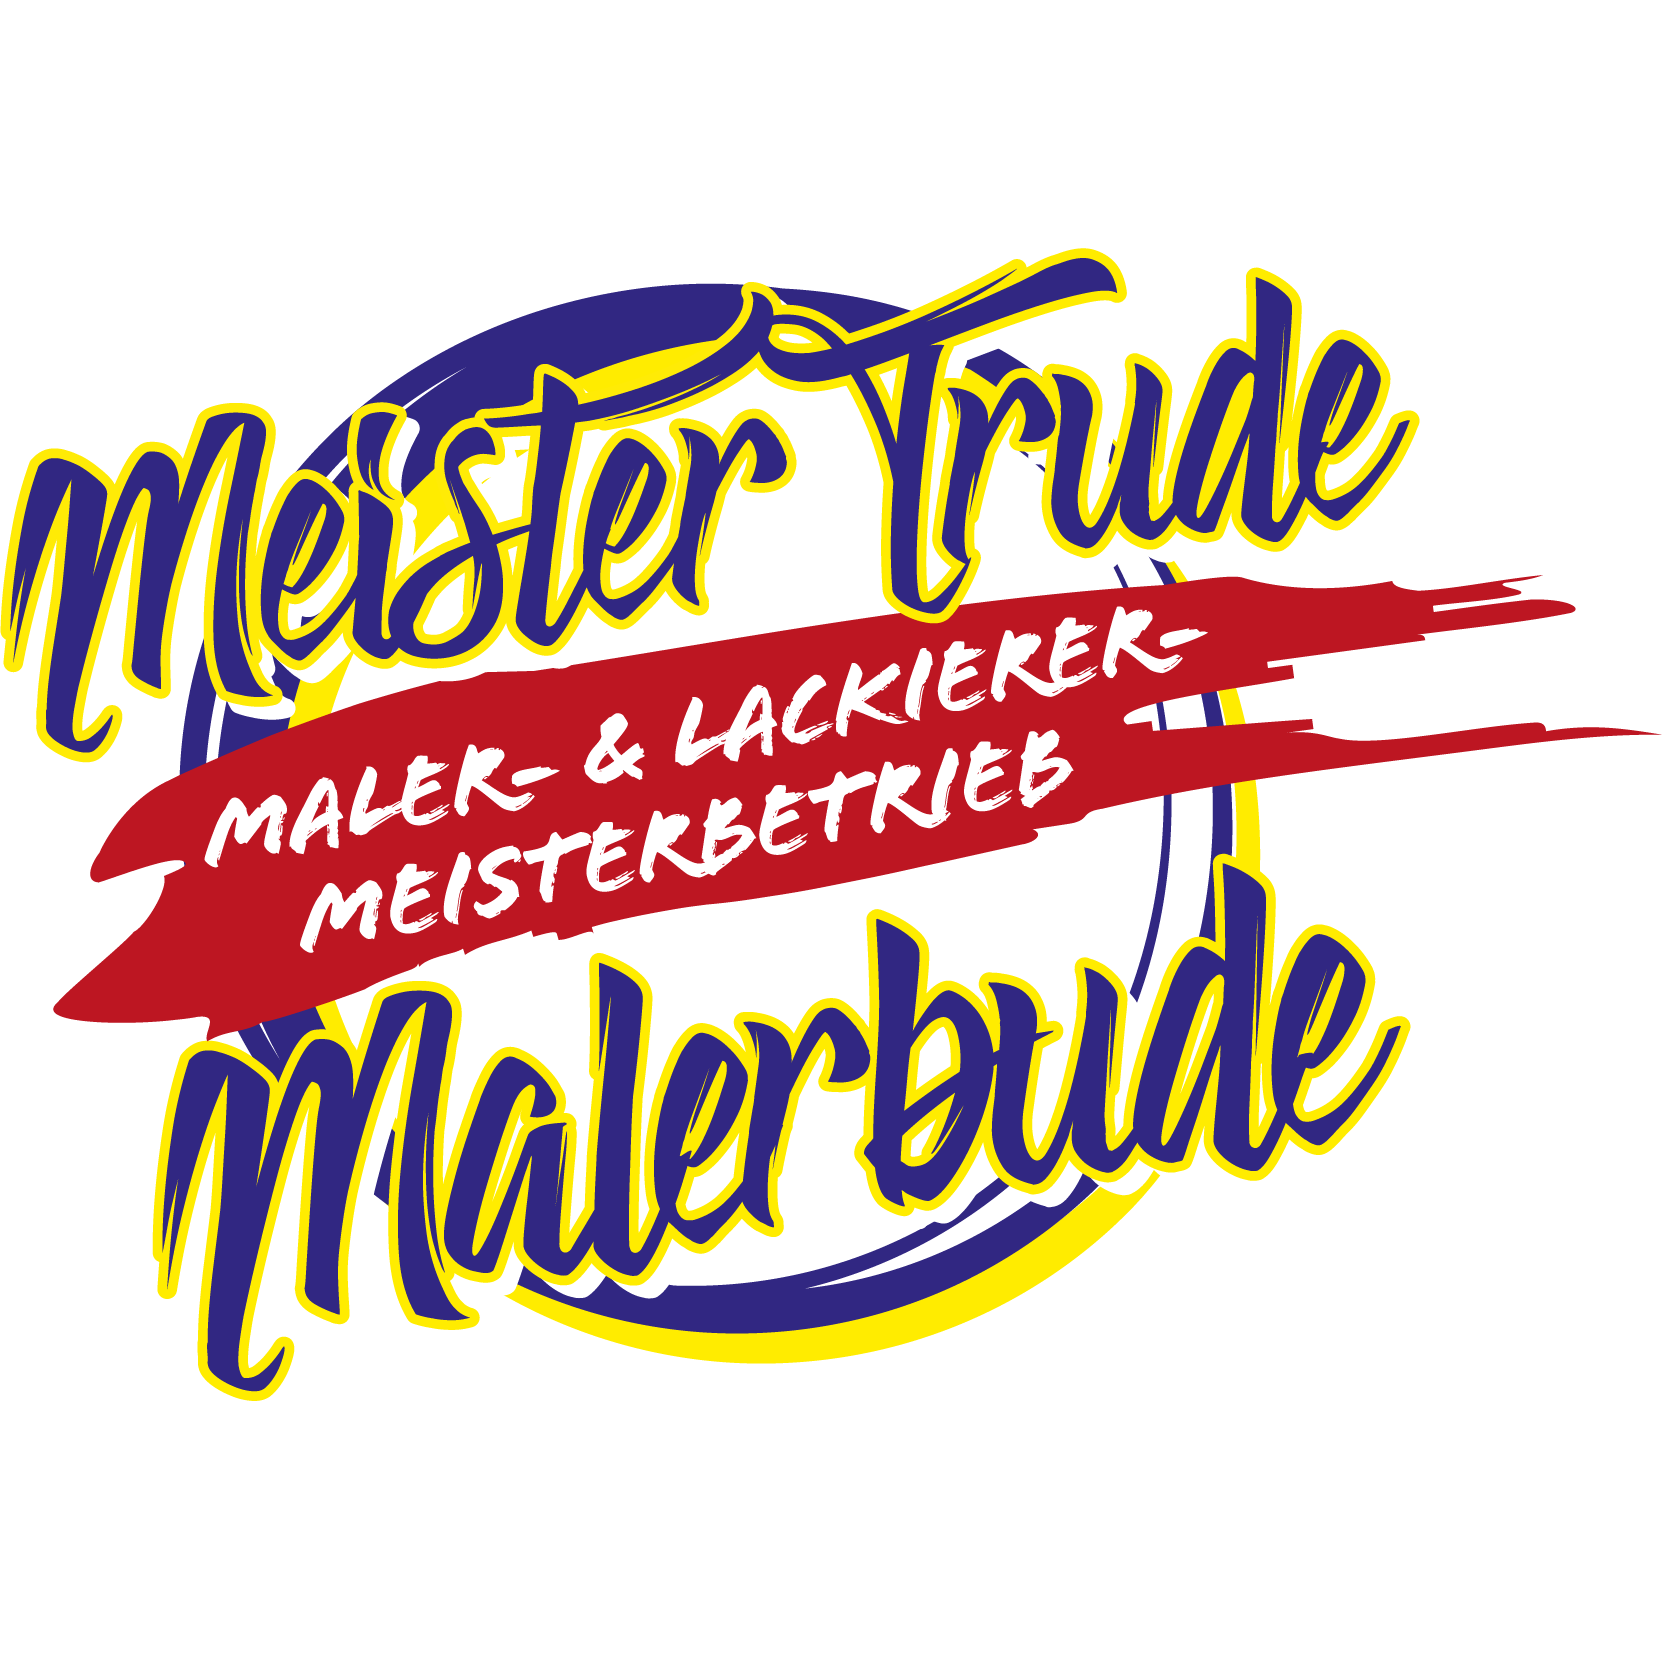 Meister Trude Malerbude Logo